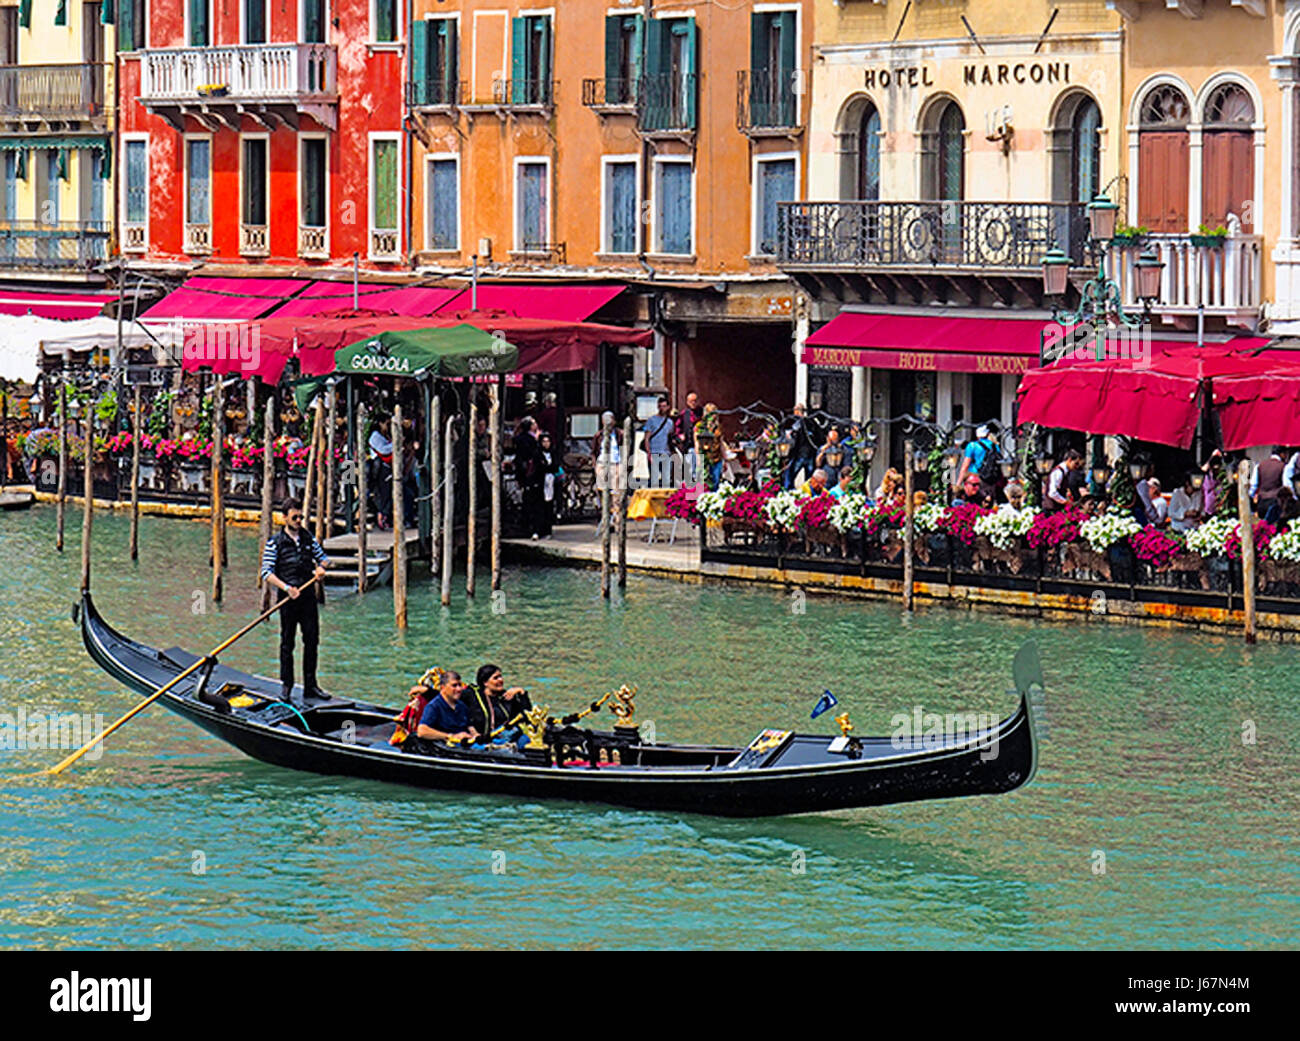 Gondola passing restaurants and hotels on the Grand Canal near Rialto Bridge in Venice. Stock Photo